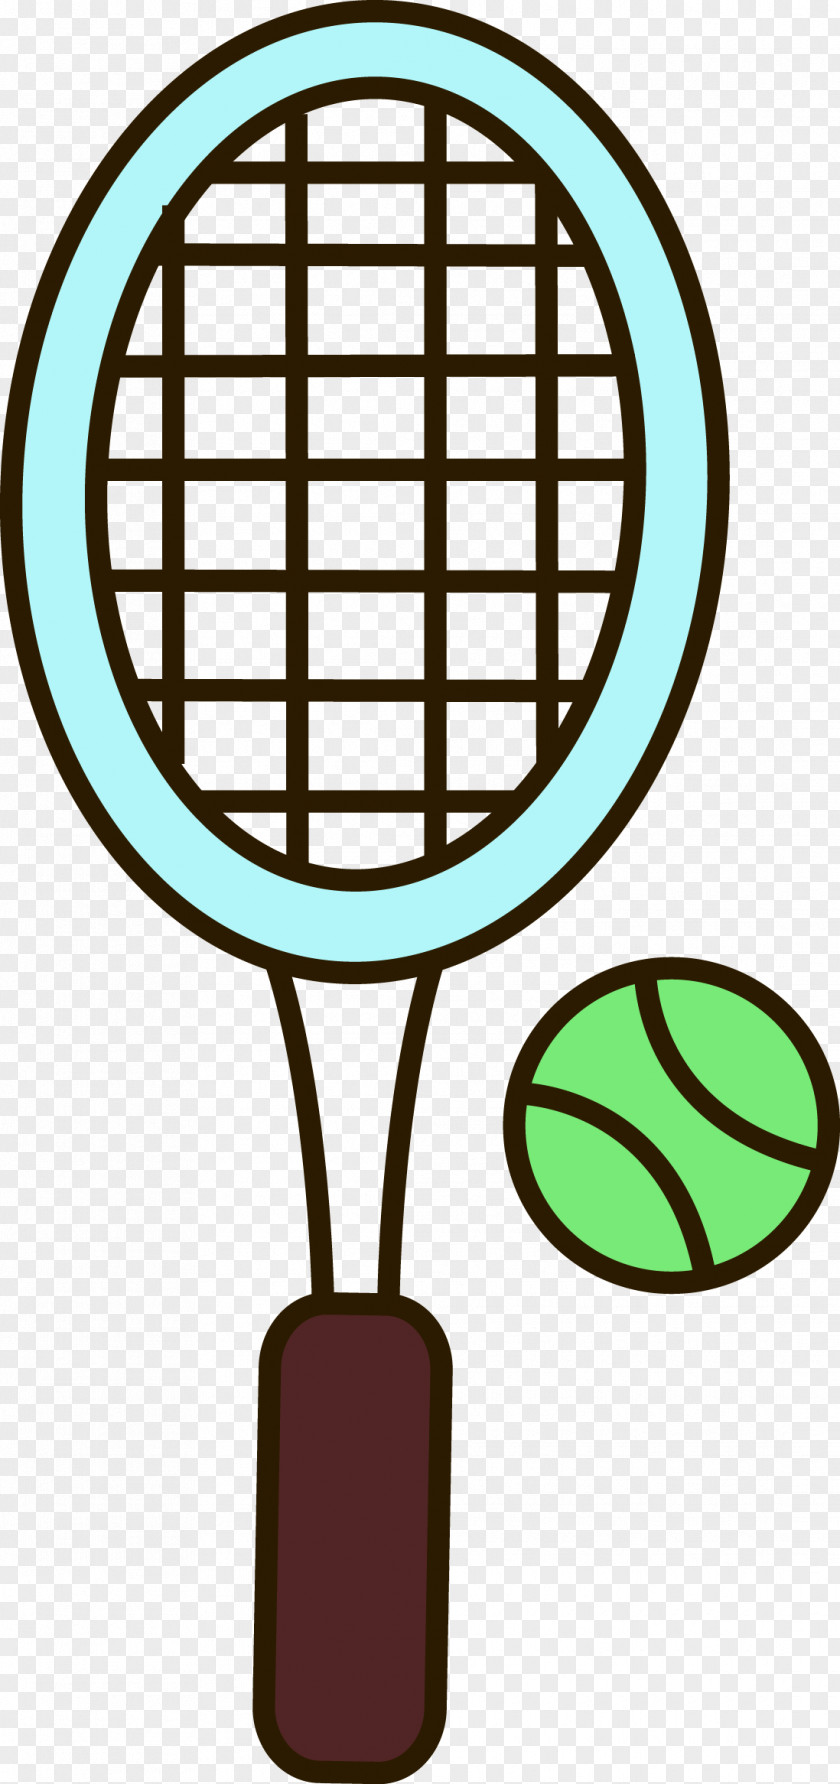 Tennis Rakieta Tenisowa Racket Illustration Image PNG